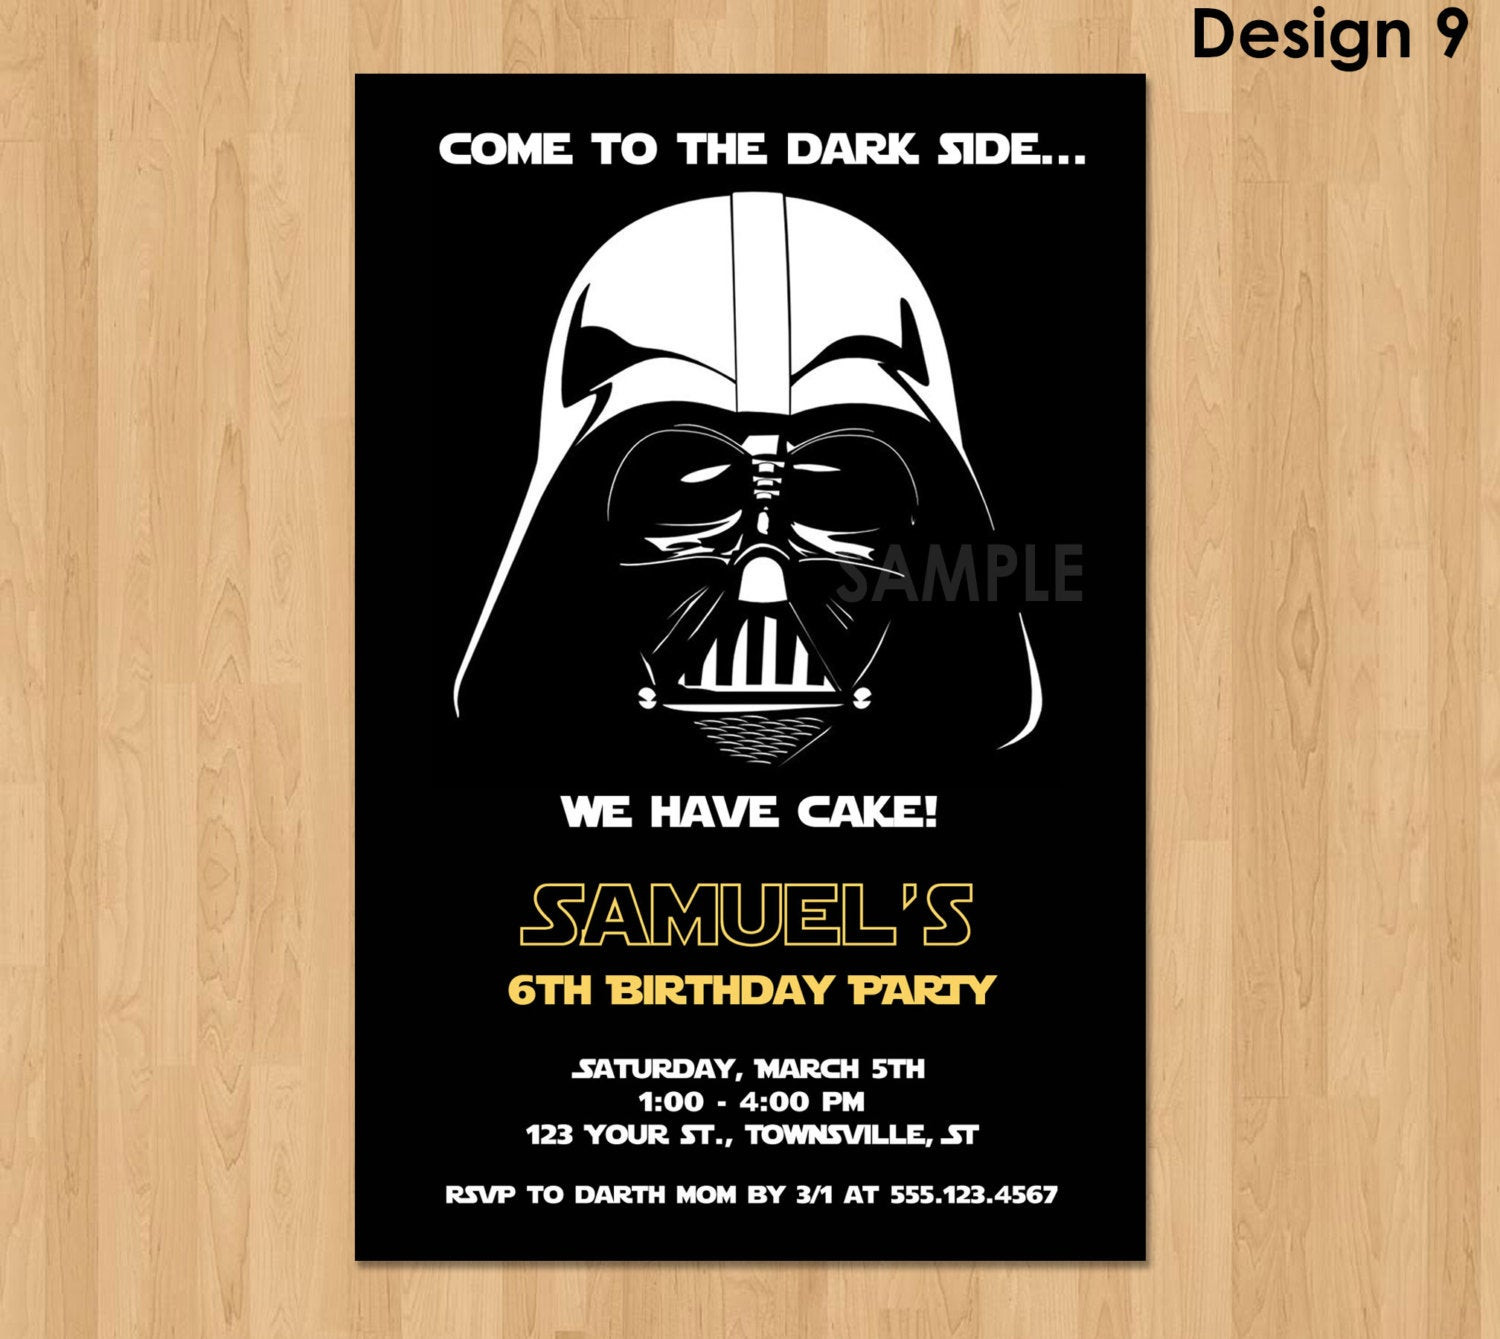 Best ideas about Star Wars Birthday Invitations
. Save or Pin Darth Vader Invitation Star Wars Birthday Invitation Star Now.